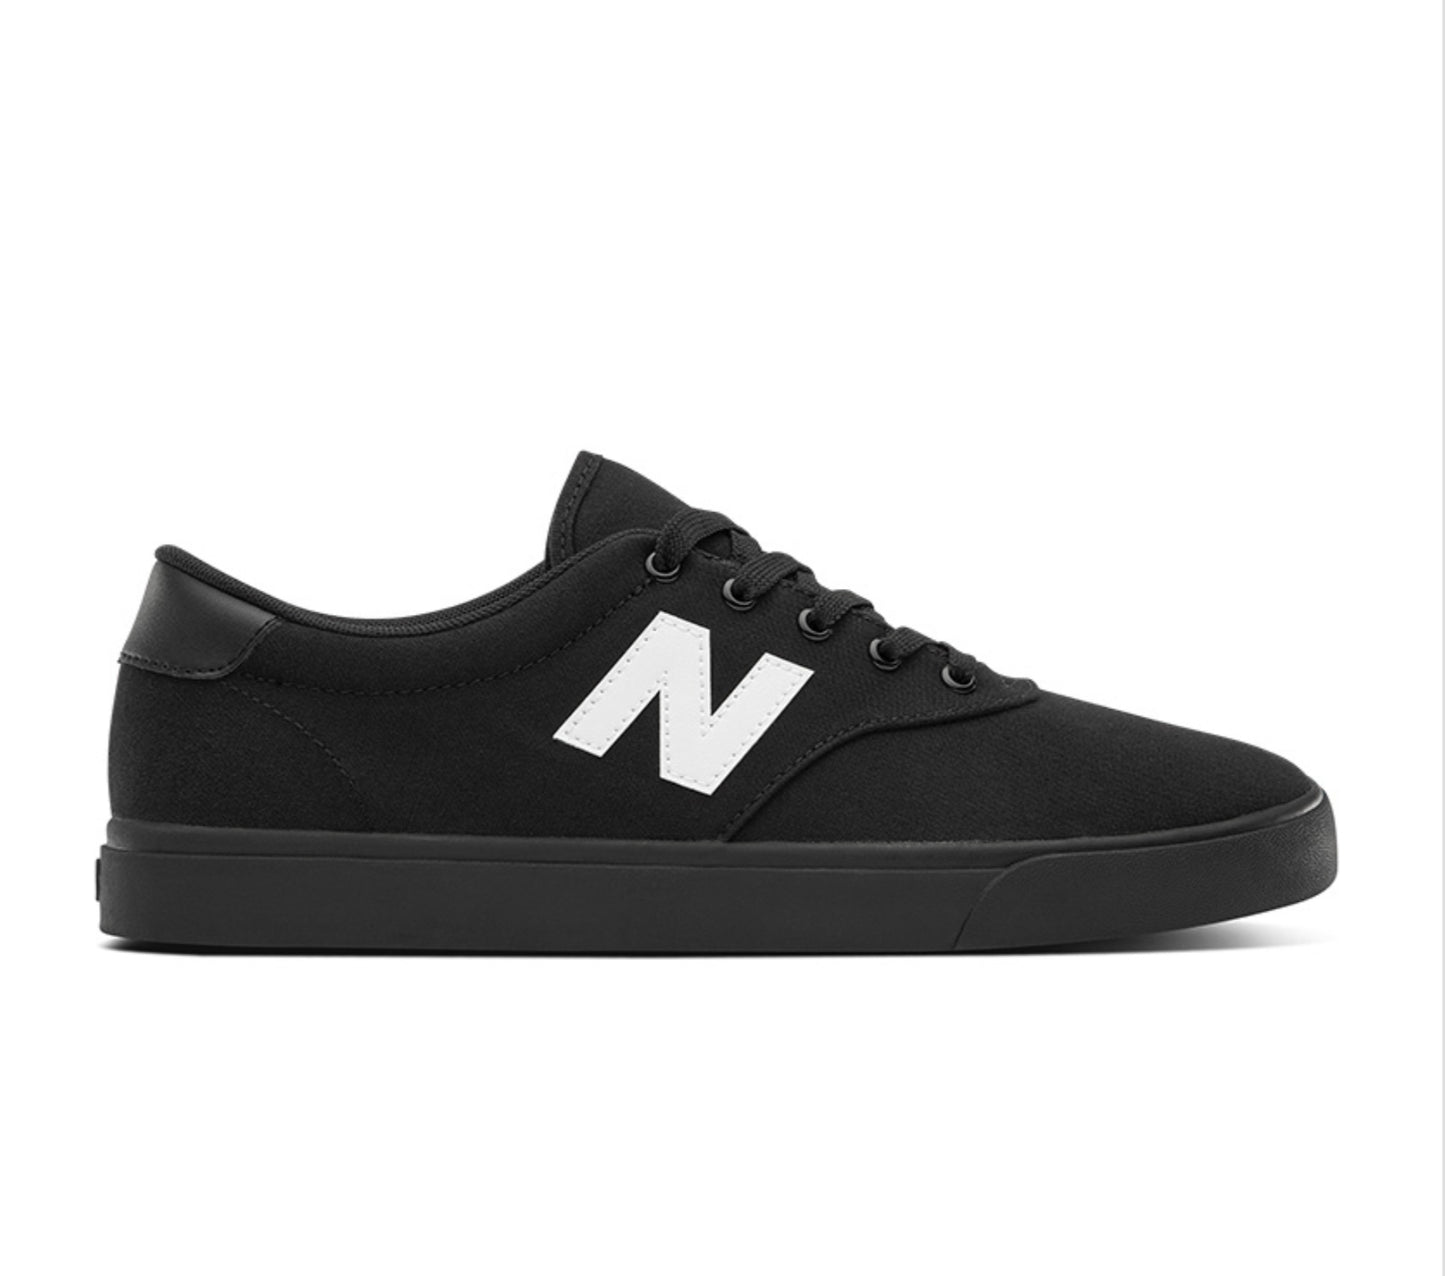 NB Shoes - All Coast 55